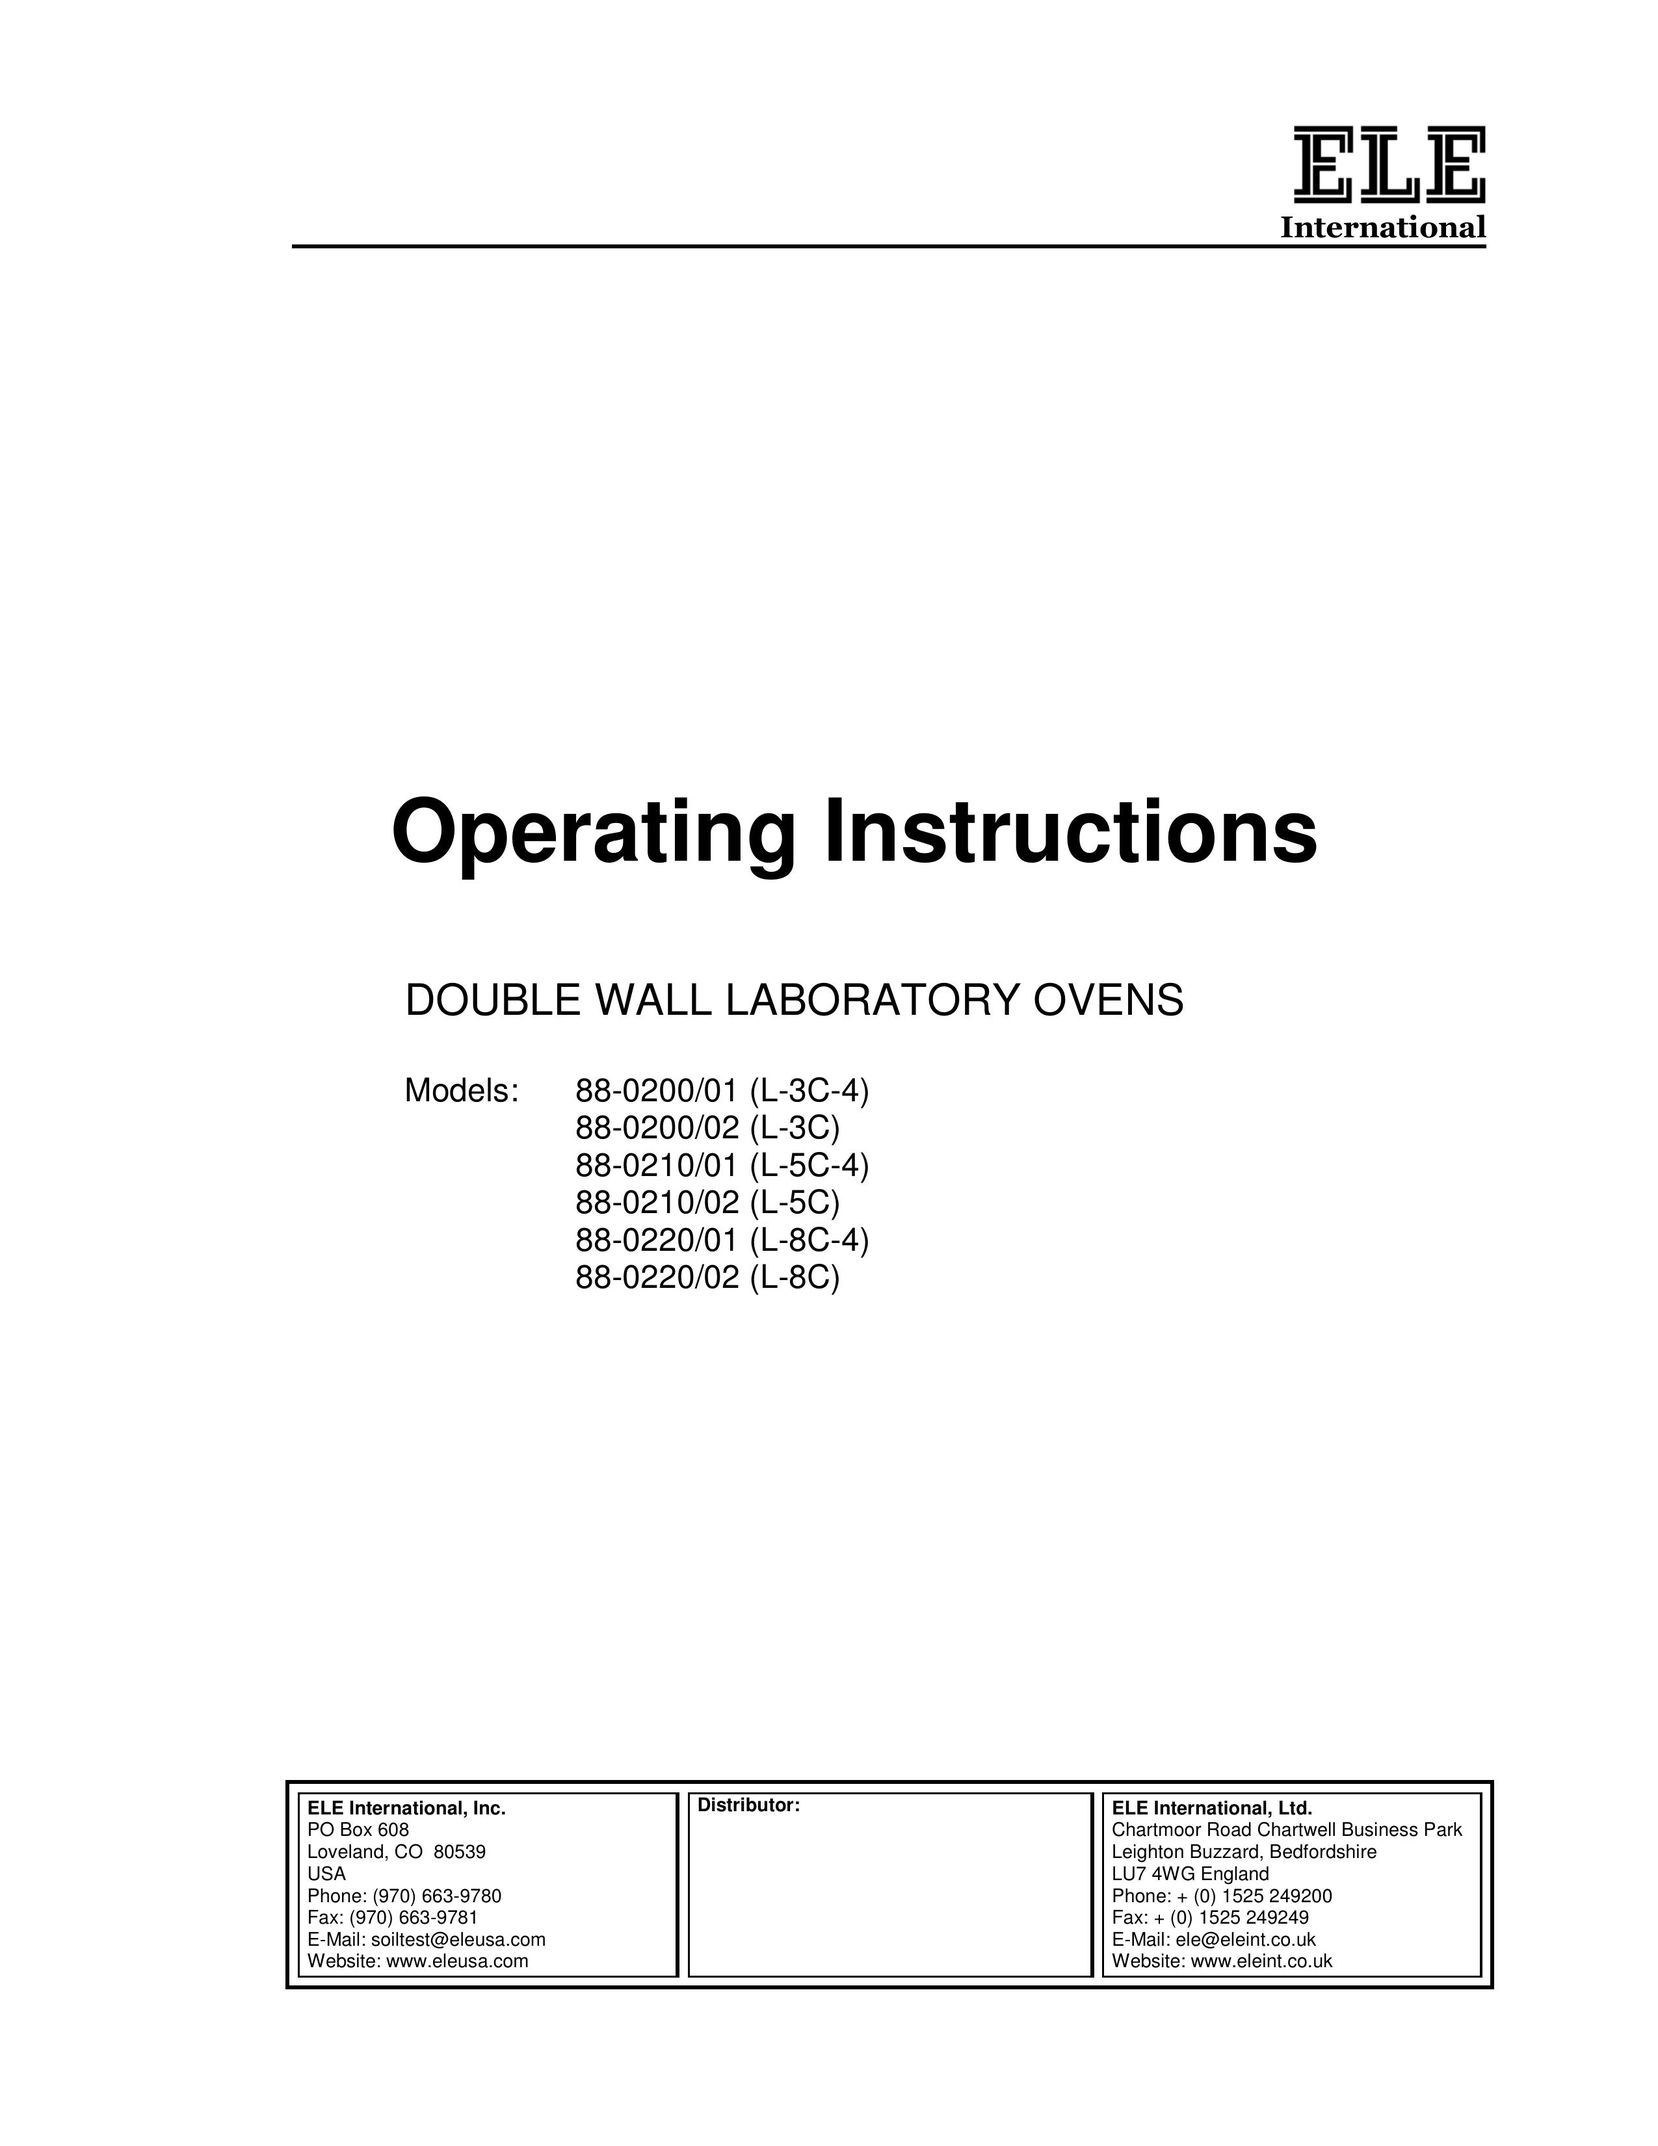 Ele 88-0210/01 (L-5C-4) Double Oven User Manual